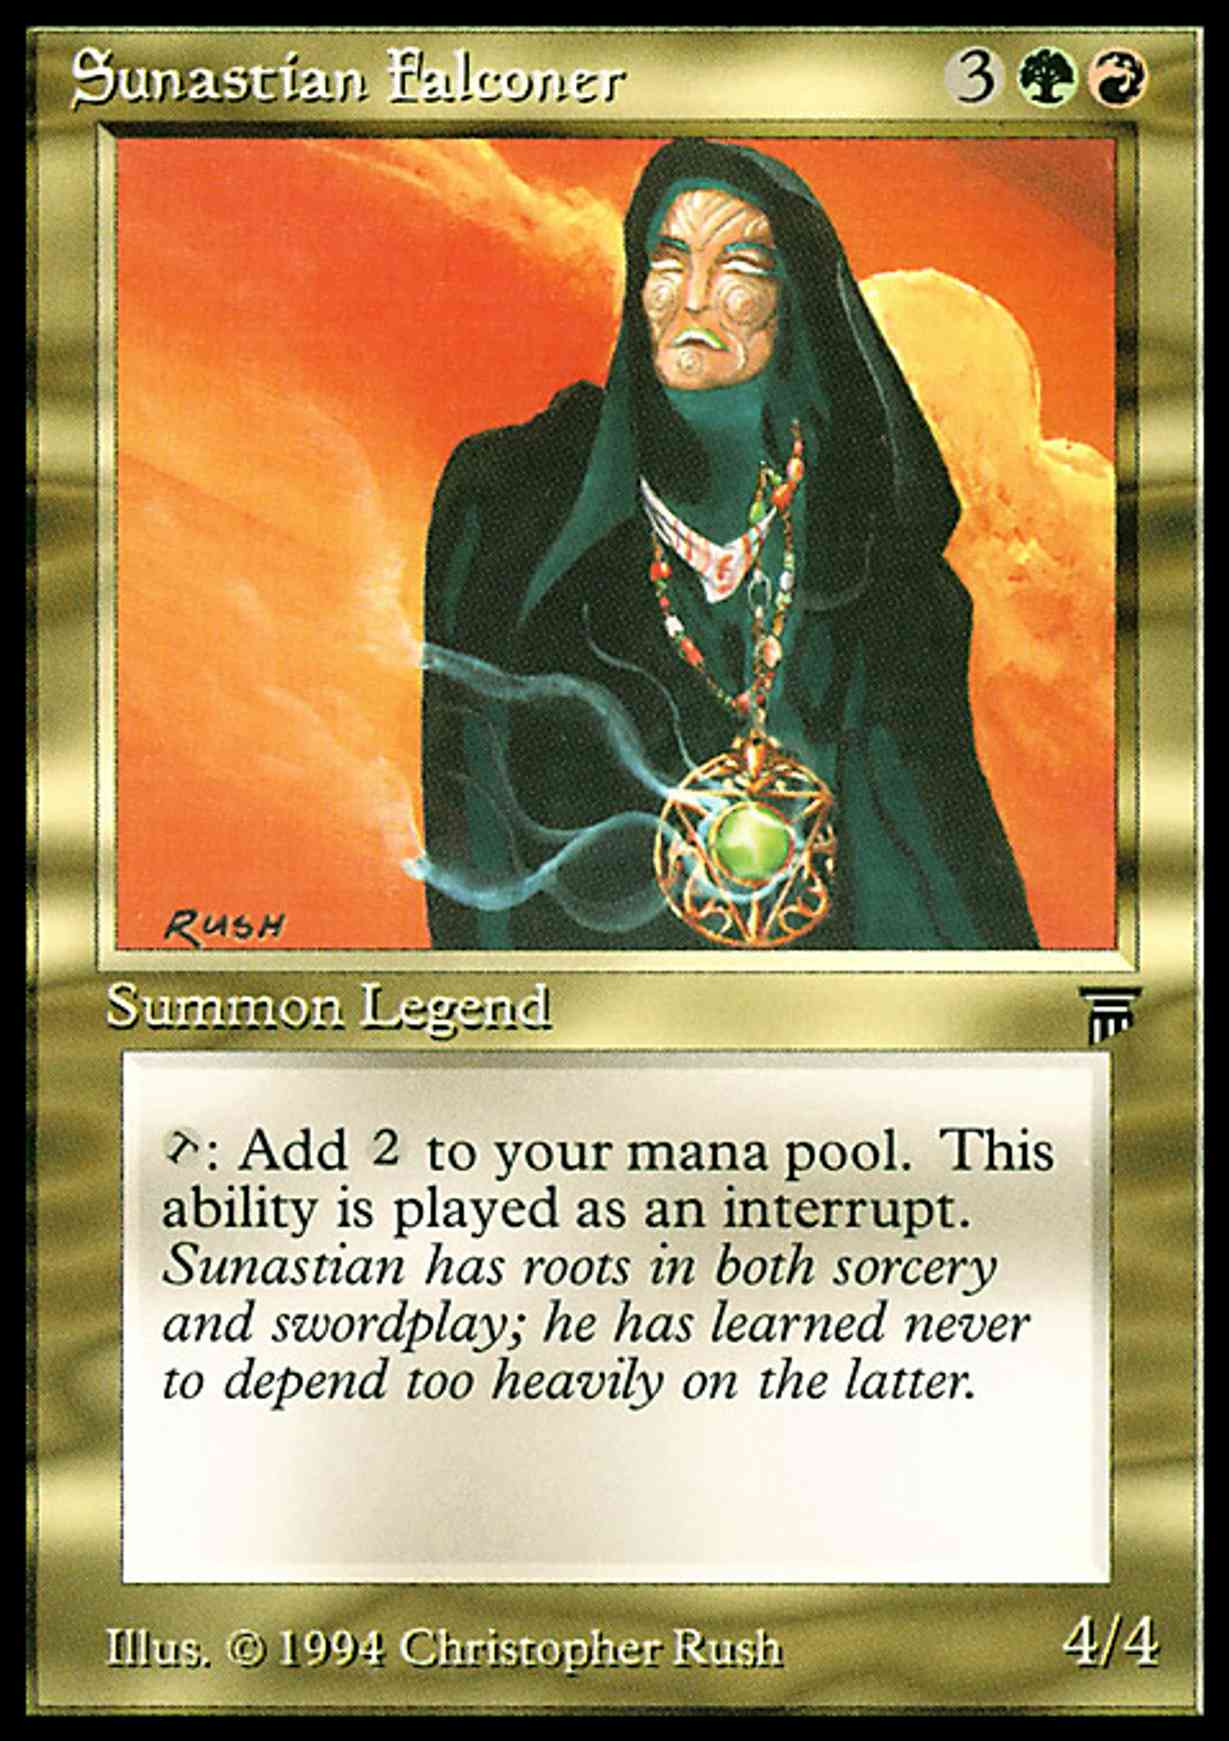 Sunastian Falconer magic card front